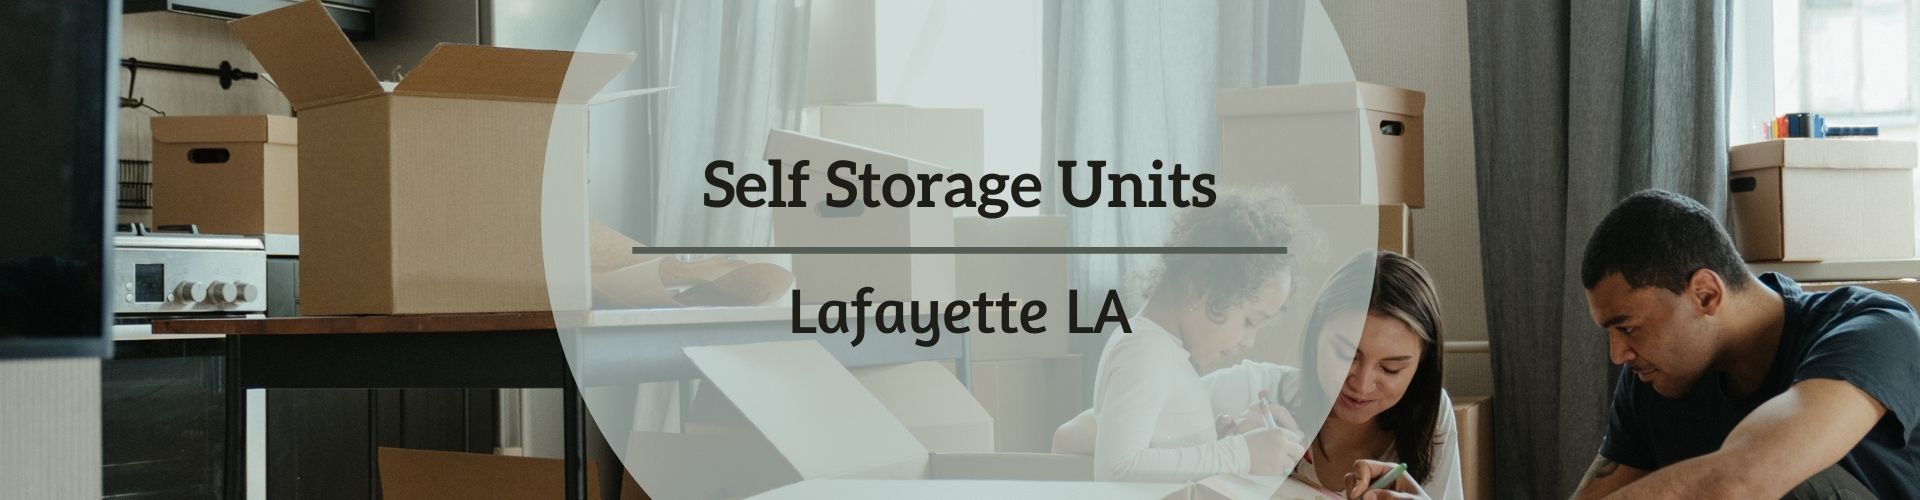 Self Storage Lafayette La